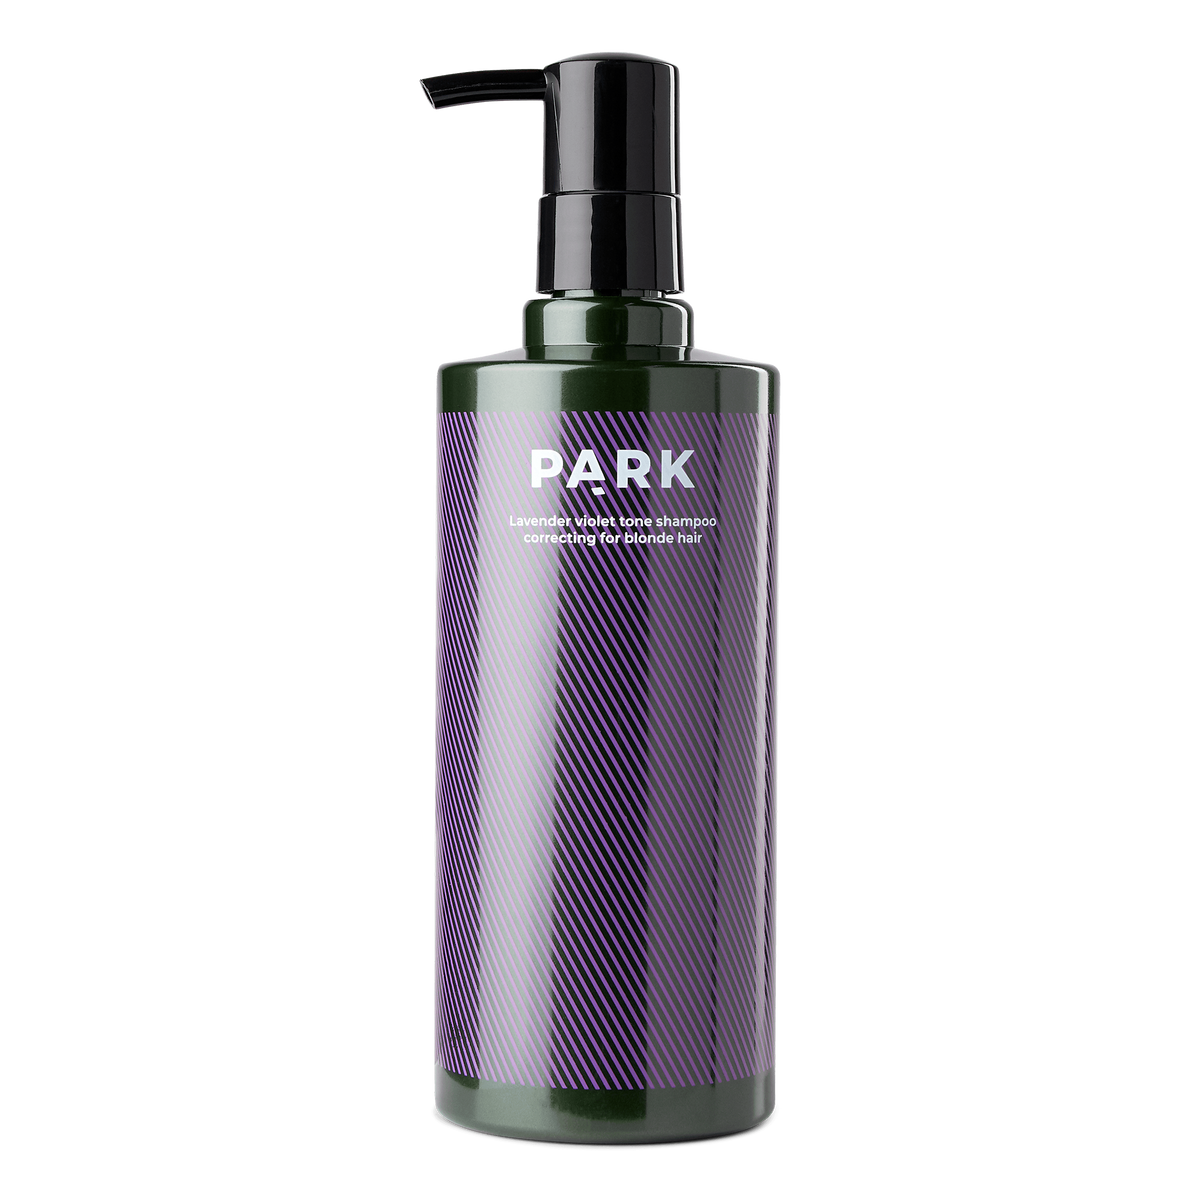 Silver shampo for blondt eller grått hår - Lavendel lilla tonet shampoo